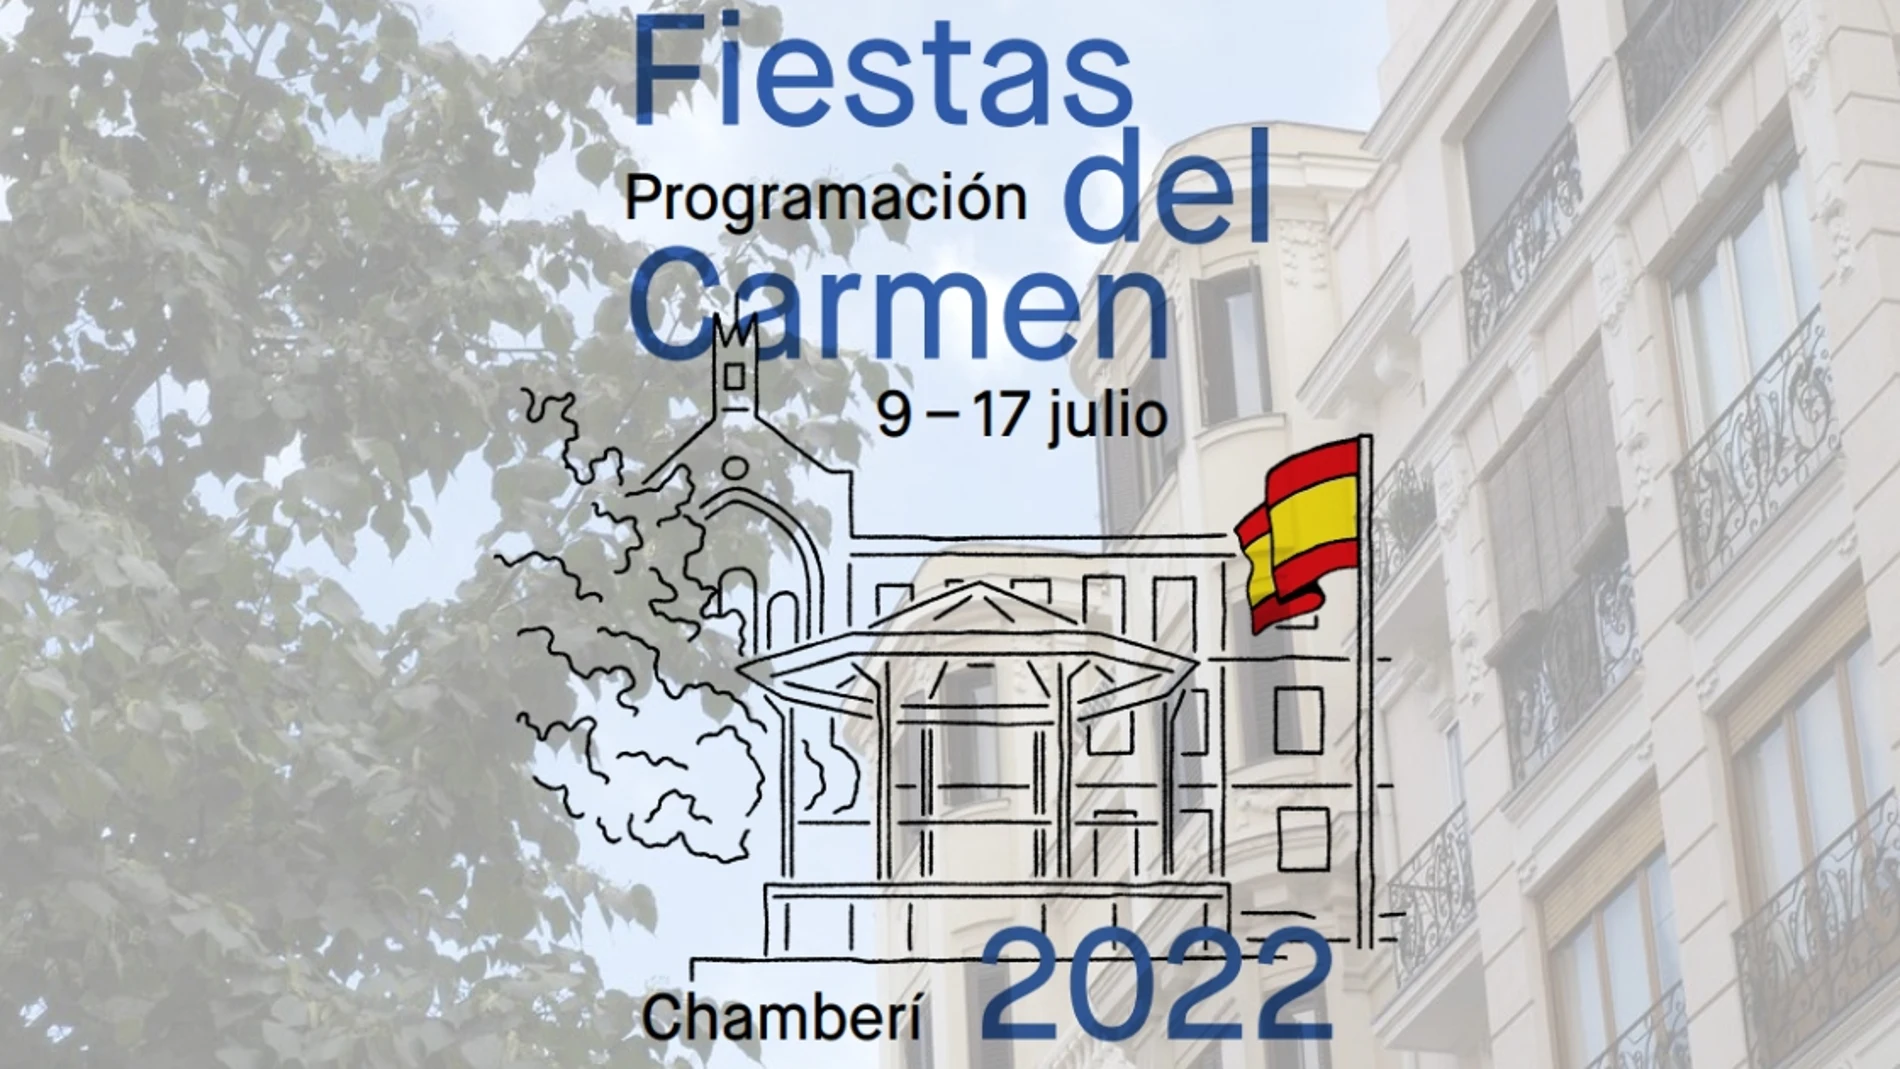 Fiestas del Carmen de Chamberí 2022